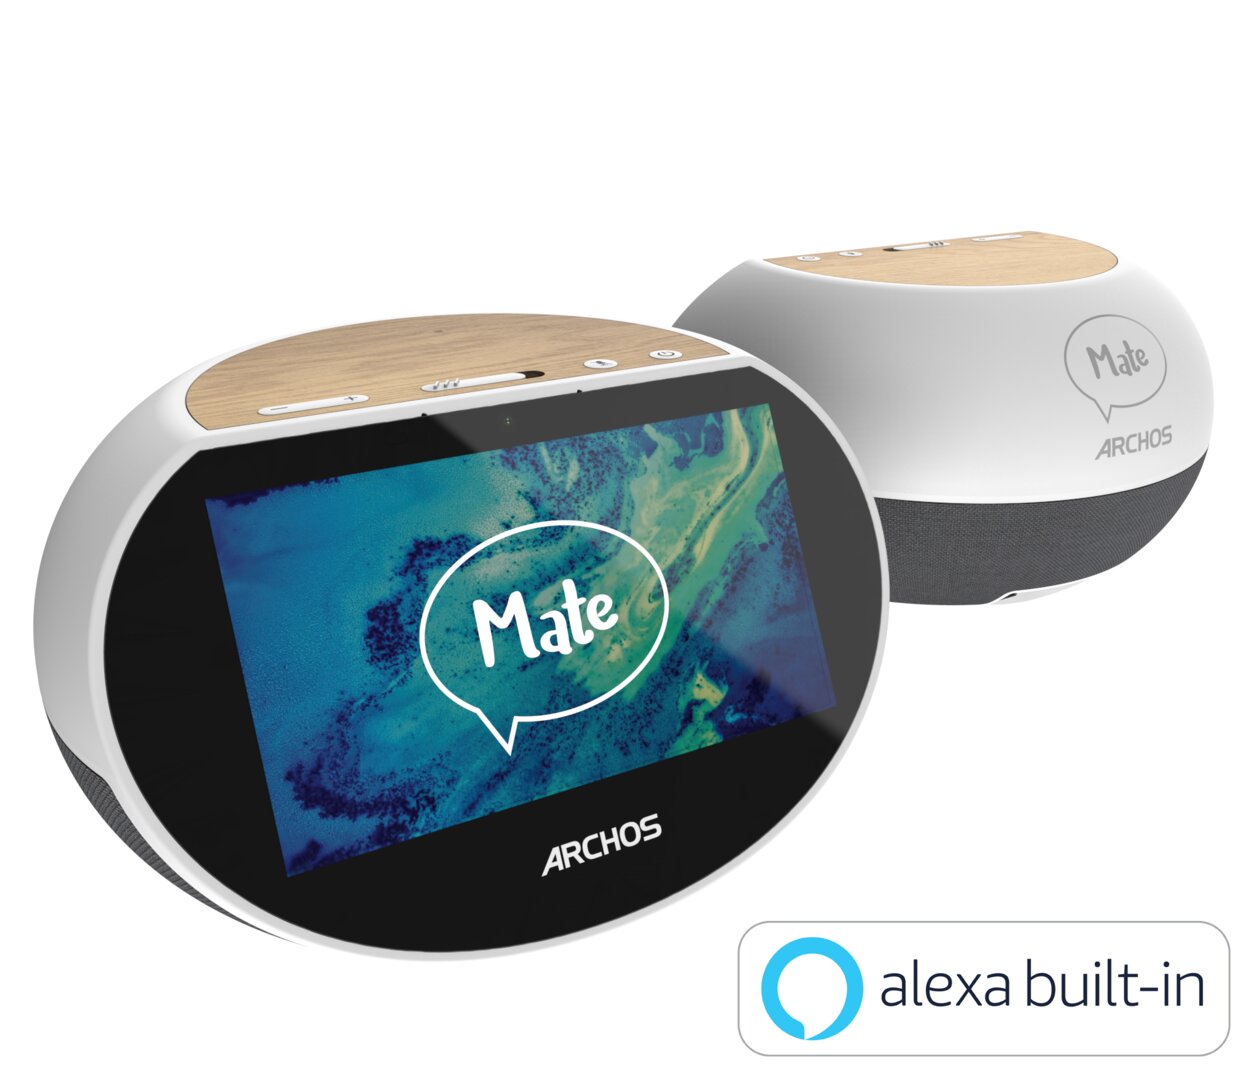 Archos Mate 5: Smart-Display mit Amazon Alexa